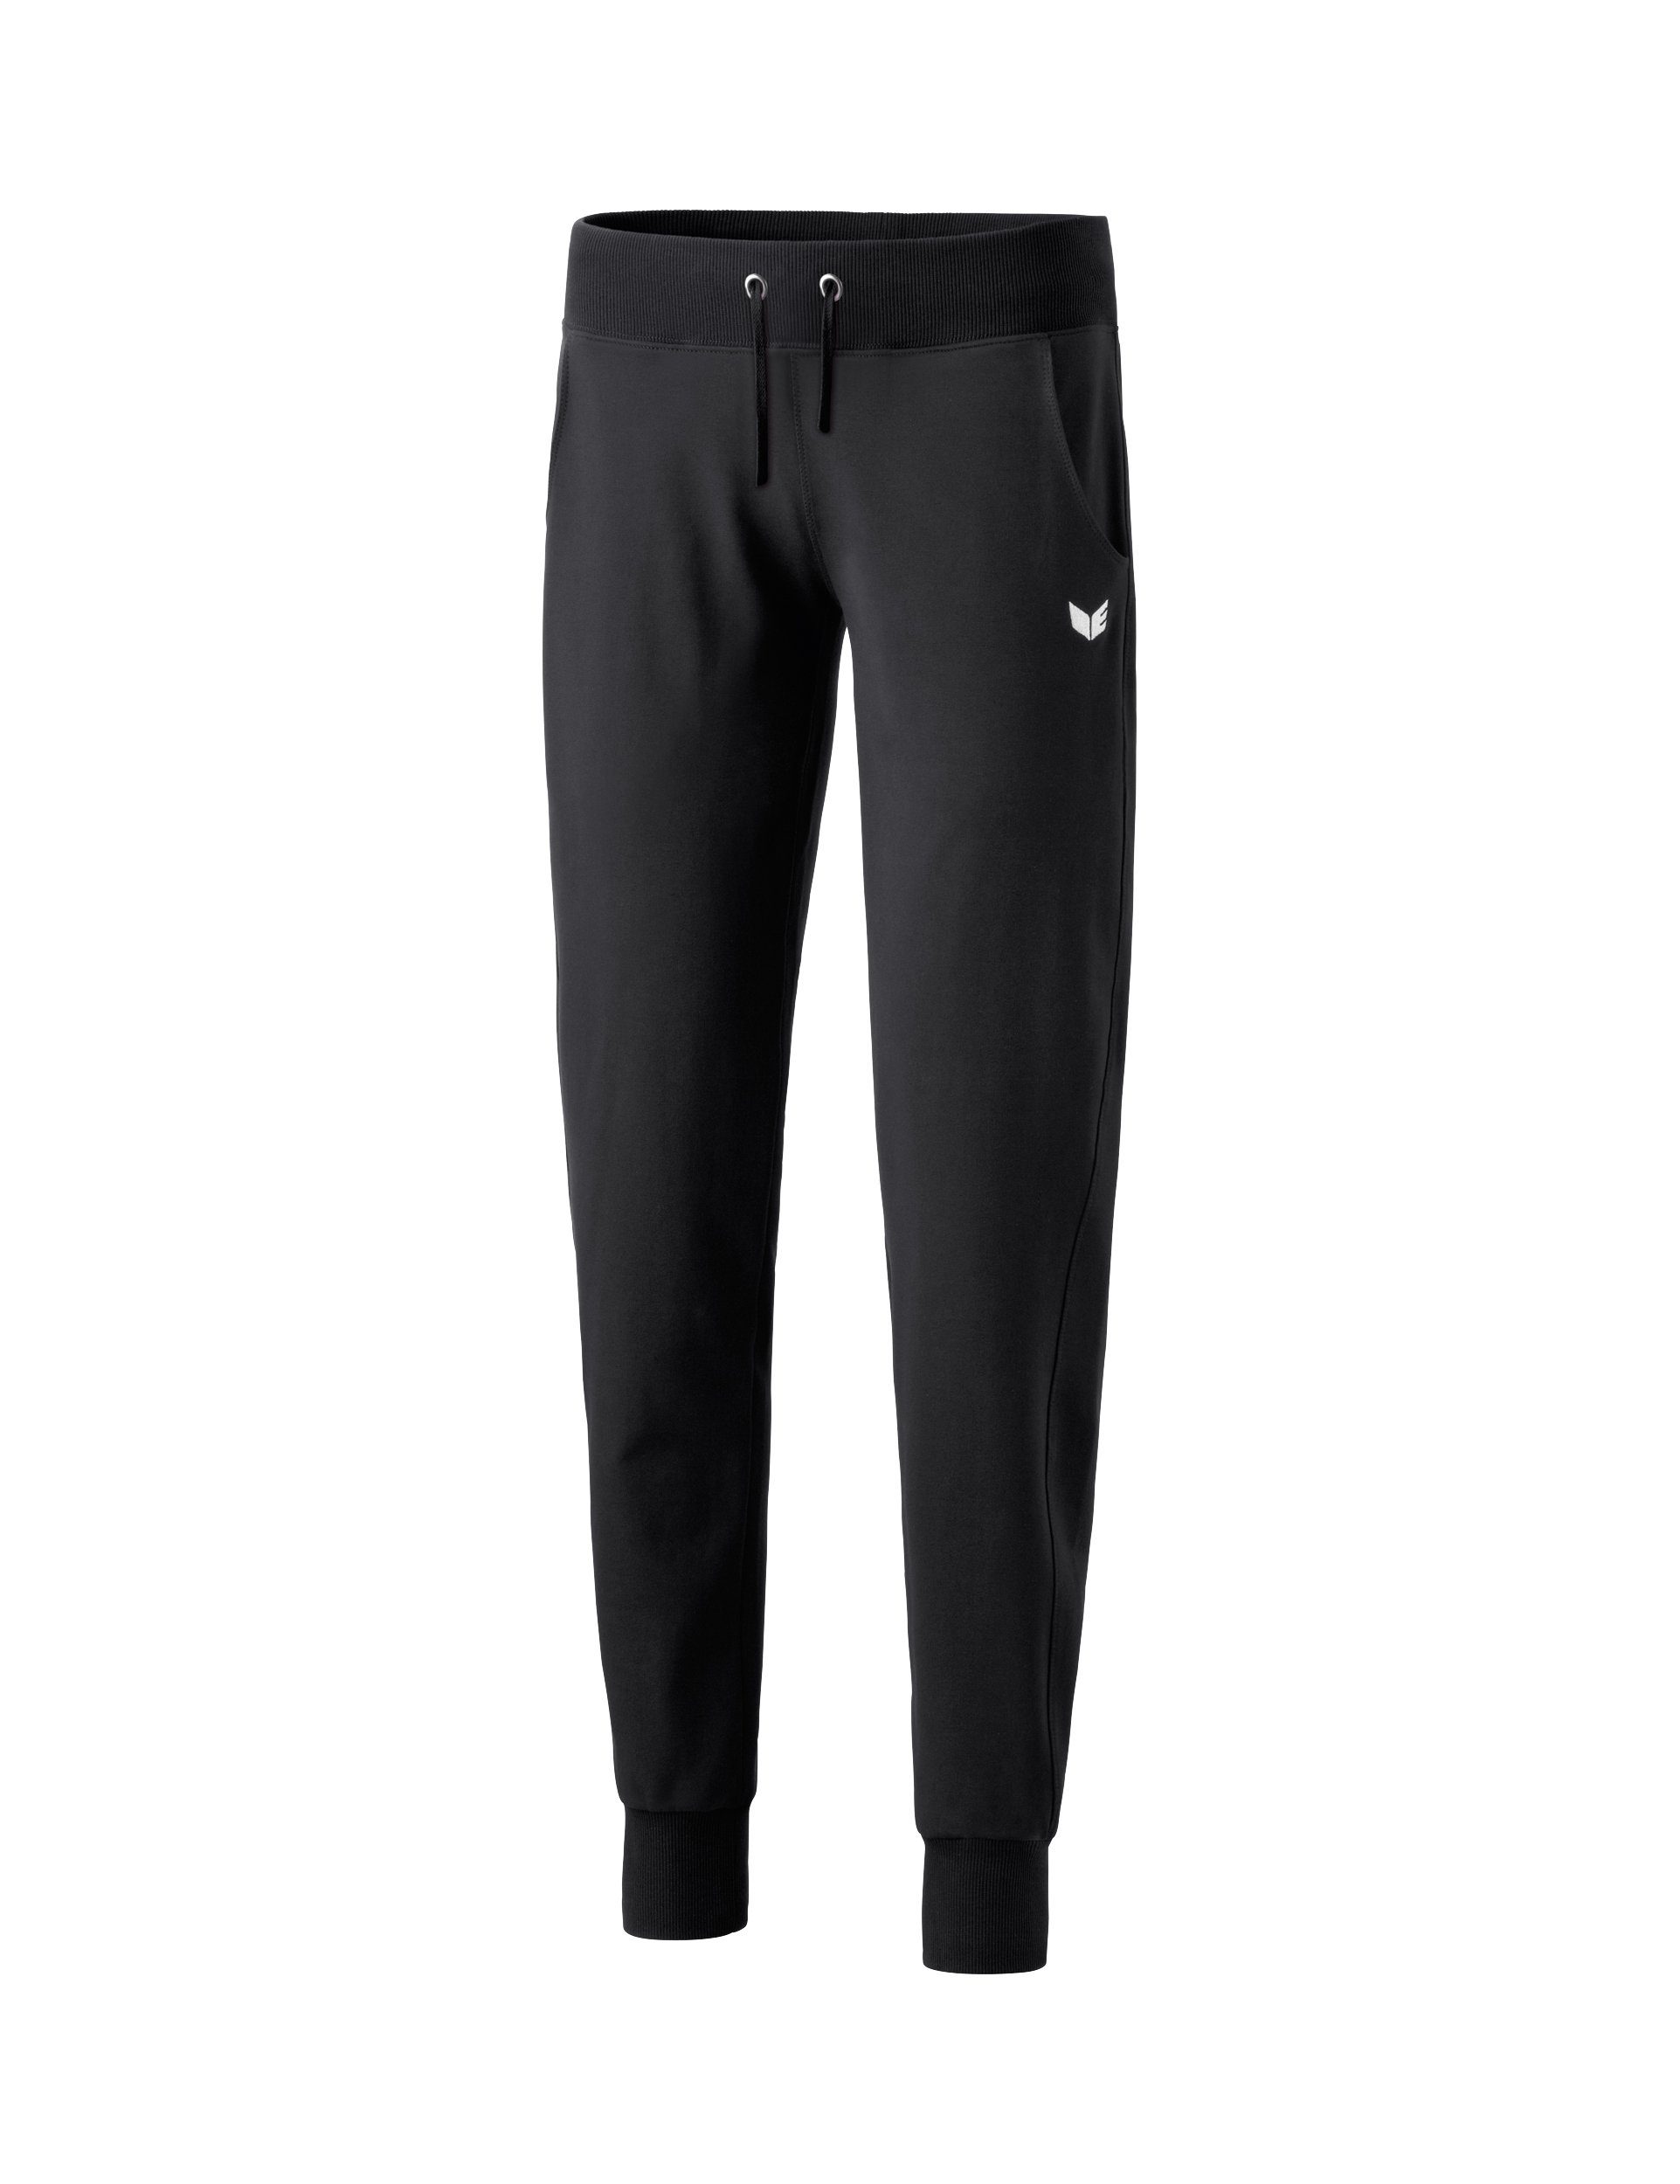 Erima Sporthose sweatpants with cuff black